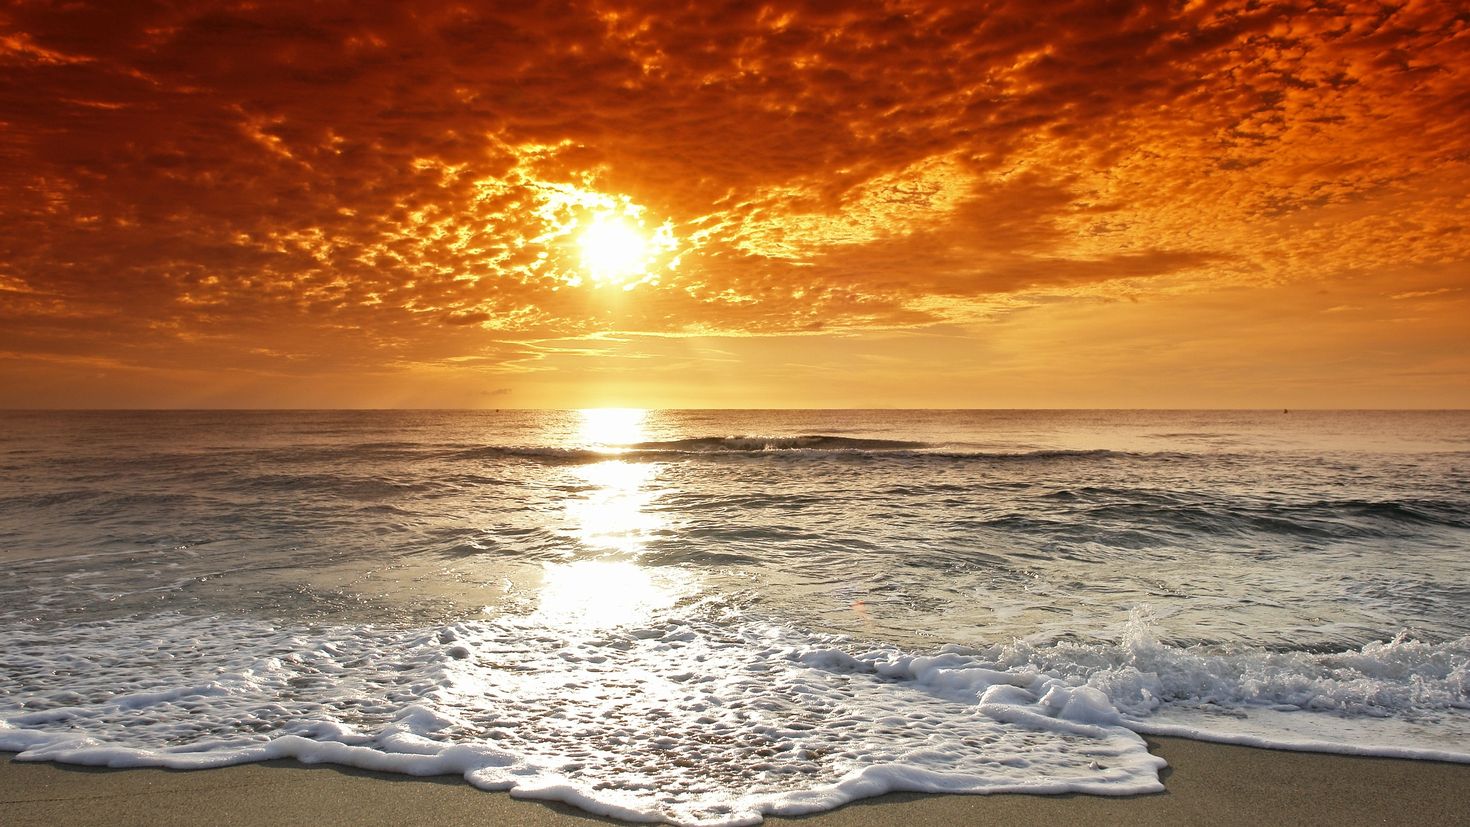 Фото моря и пляжа на закате красивые